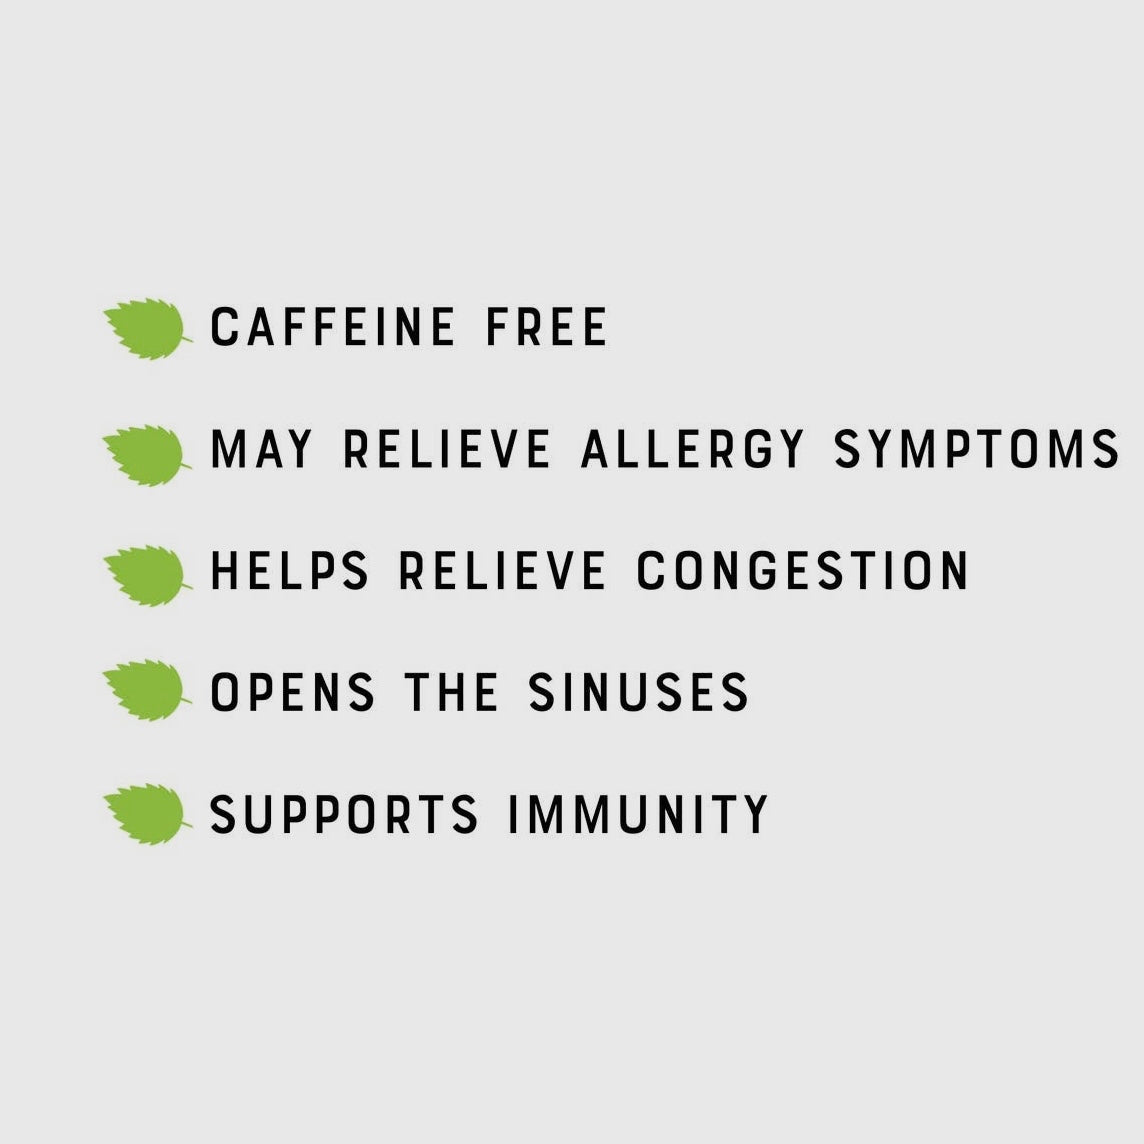 Sinus Relief Tea